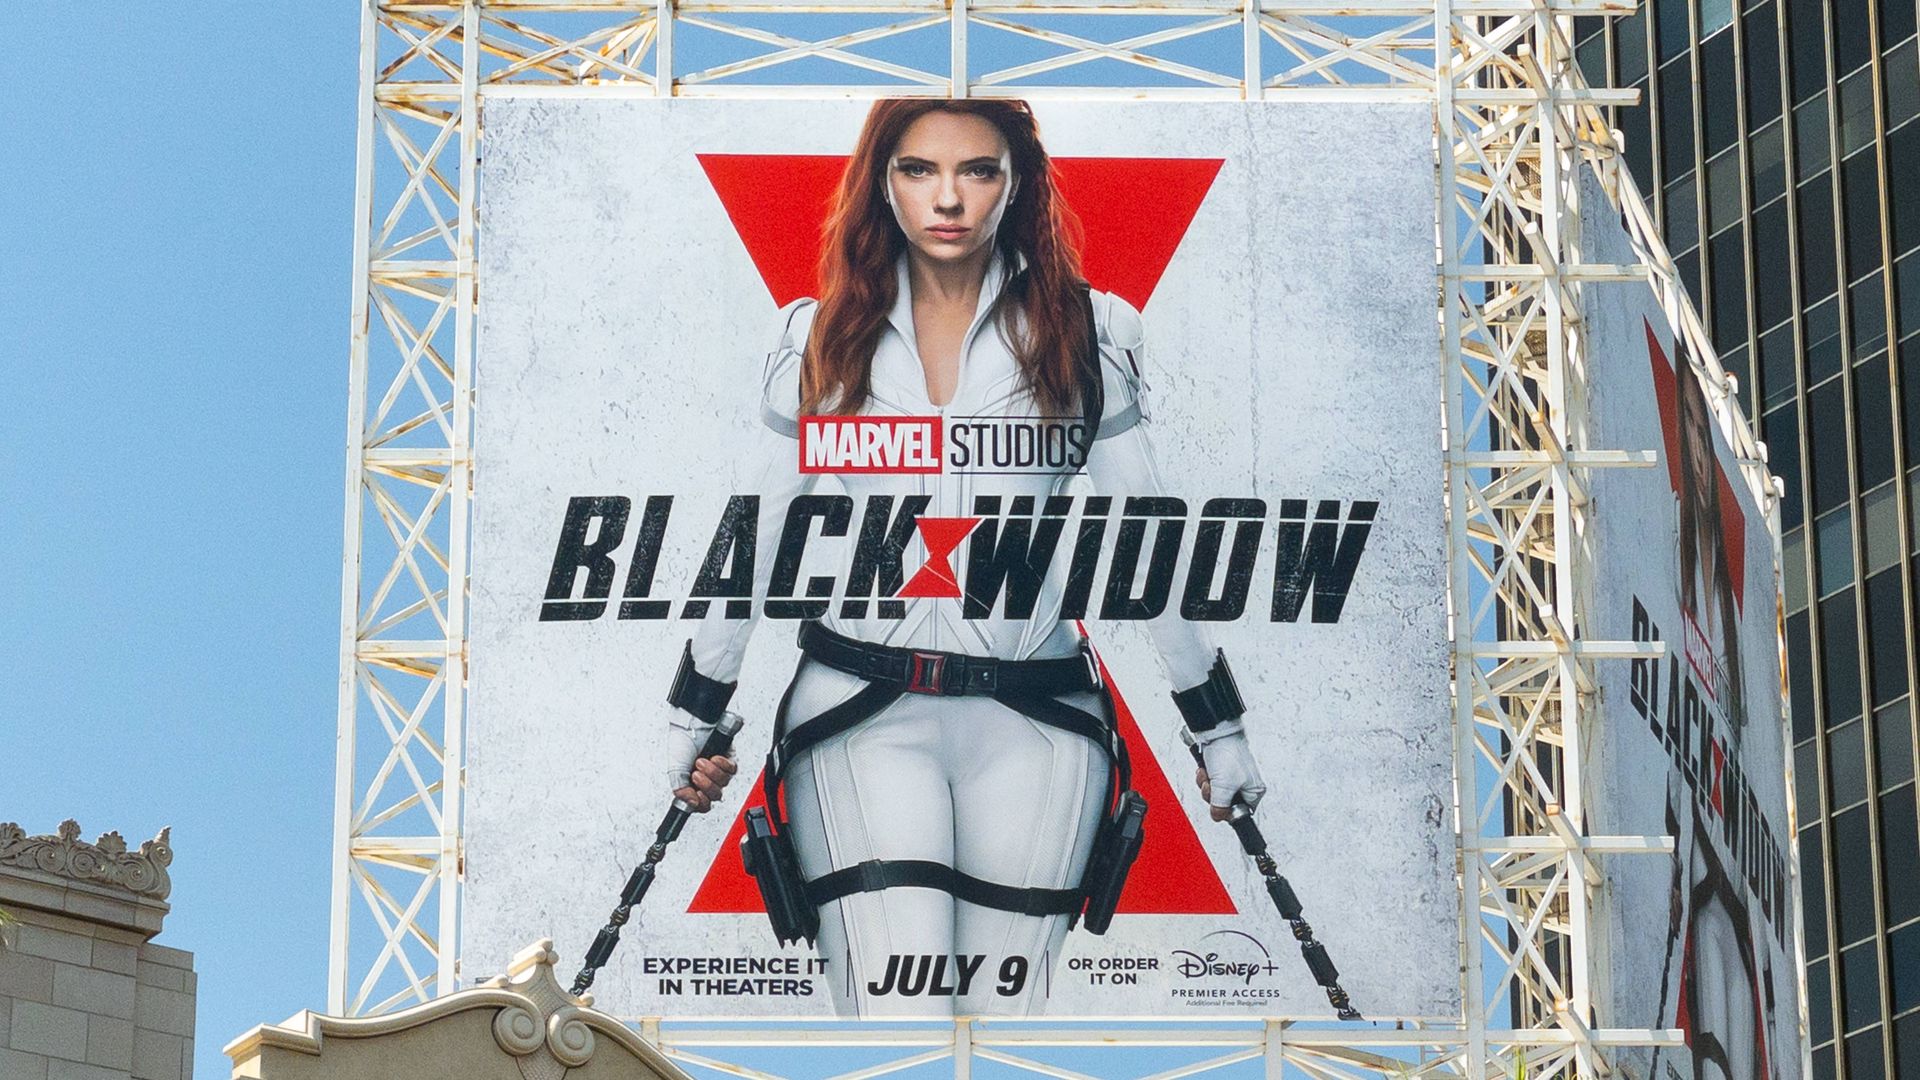 A Black Widow movie poster